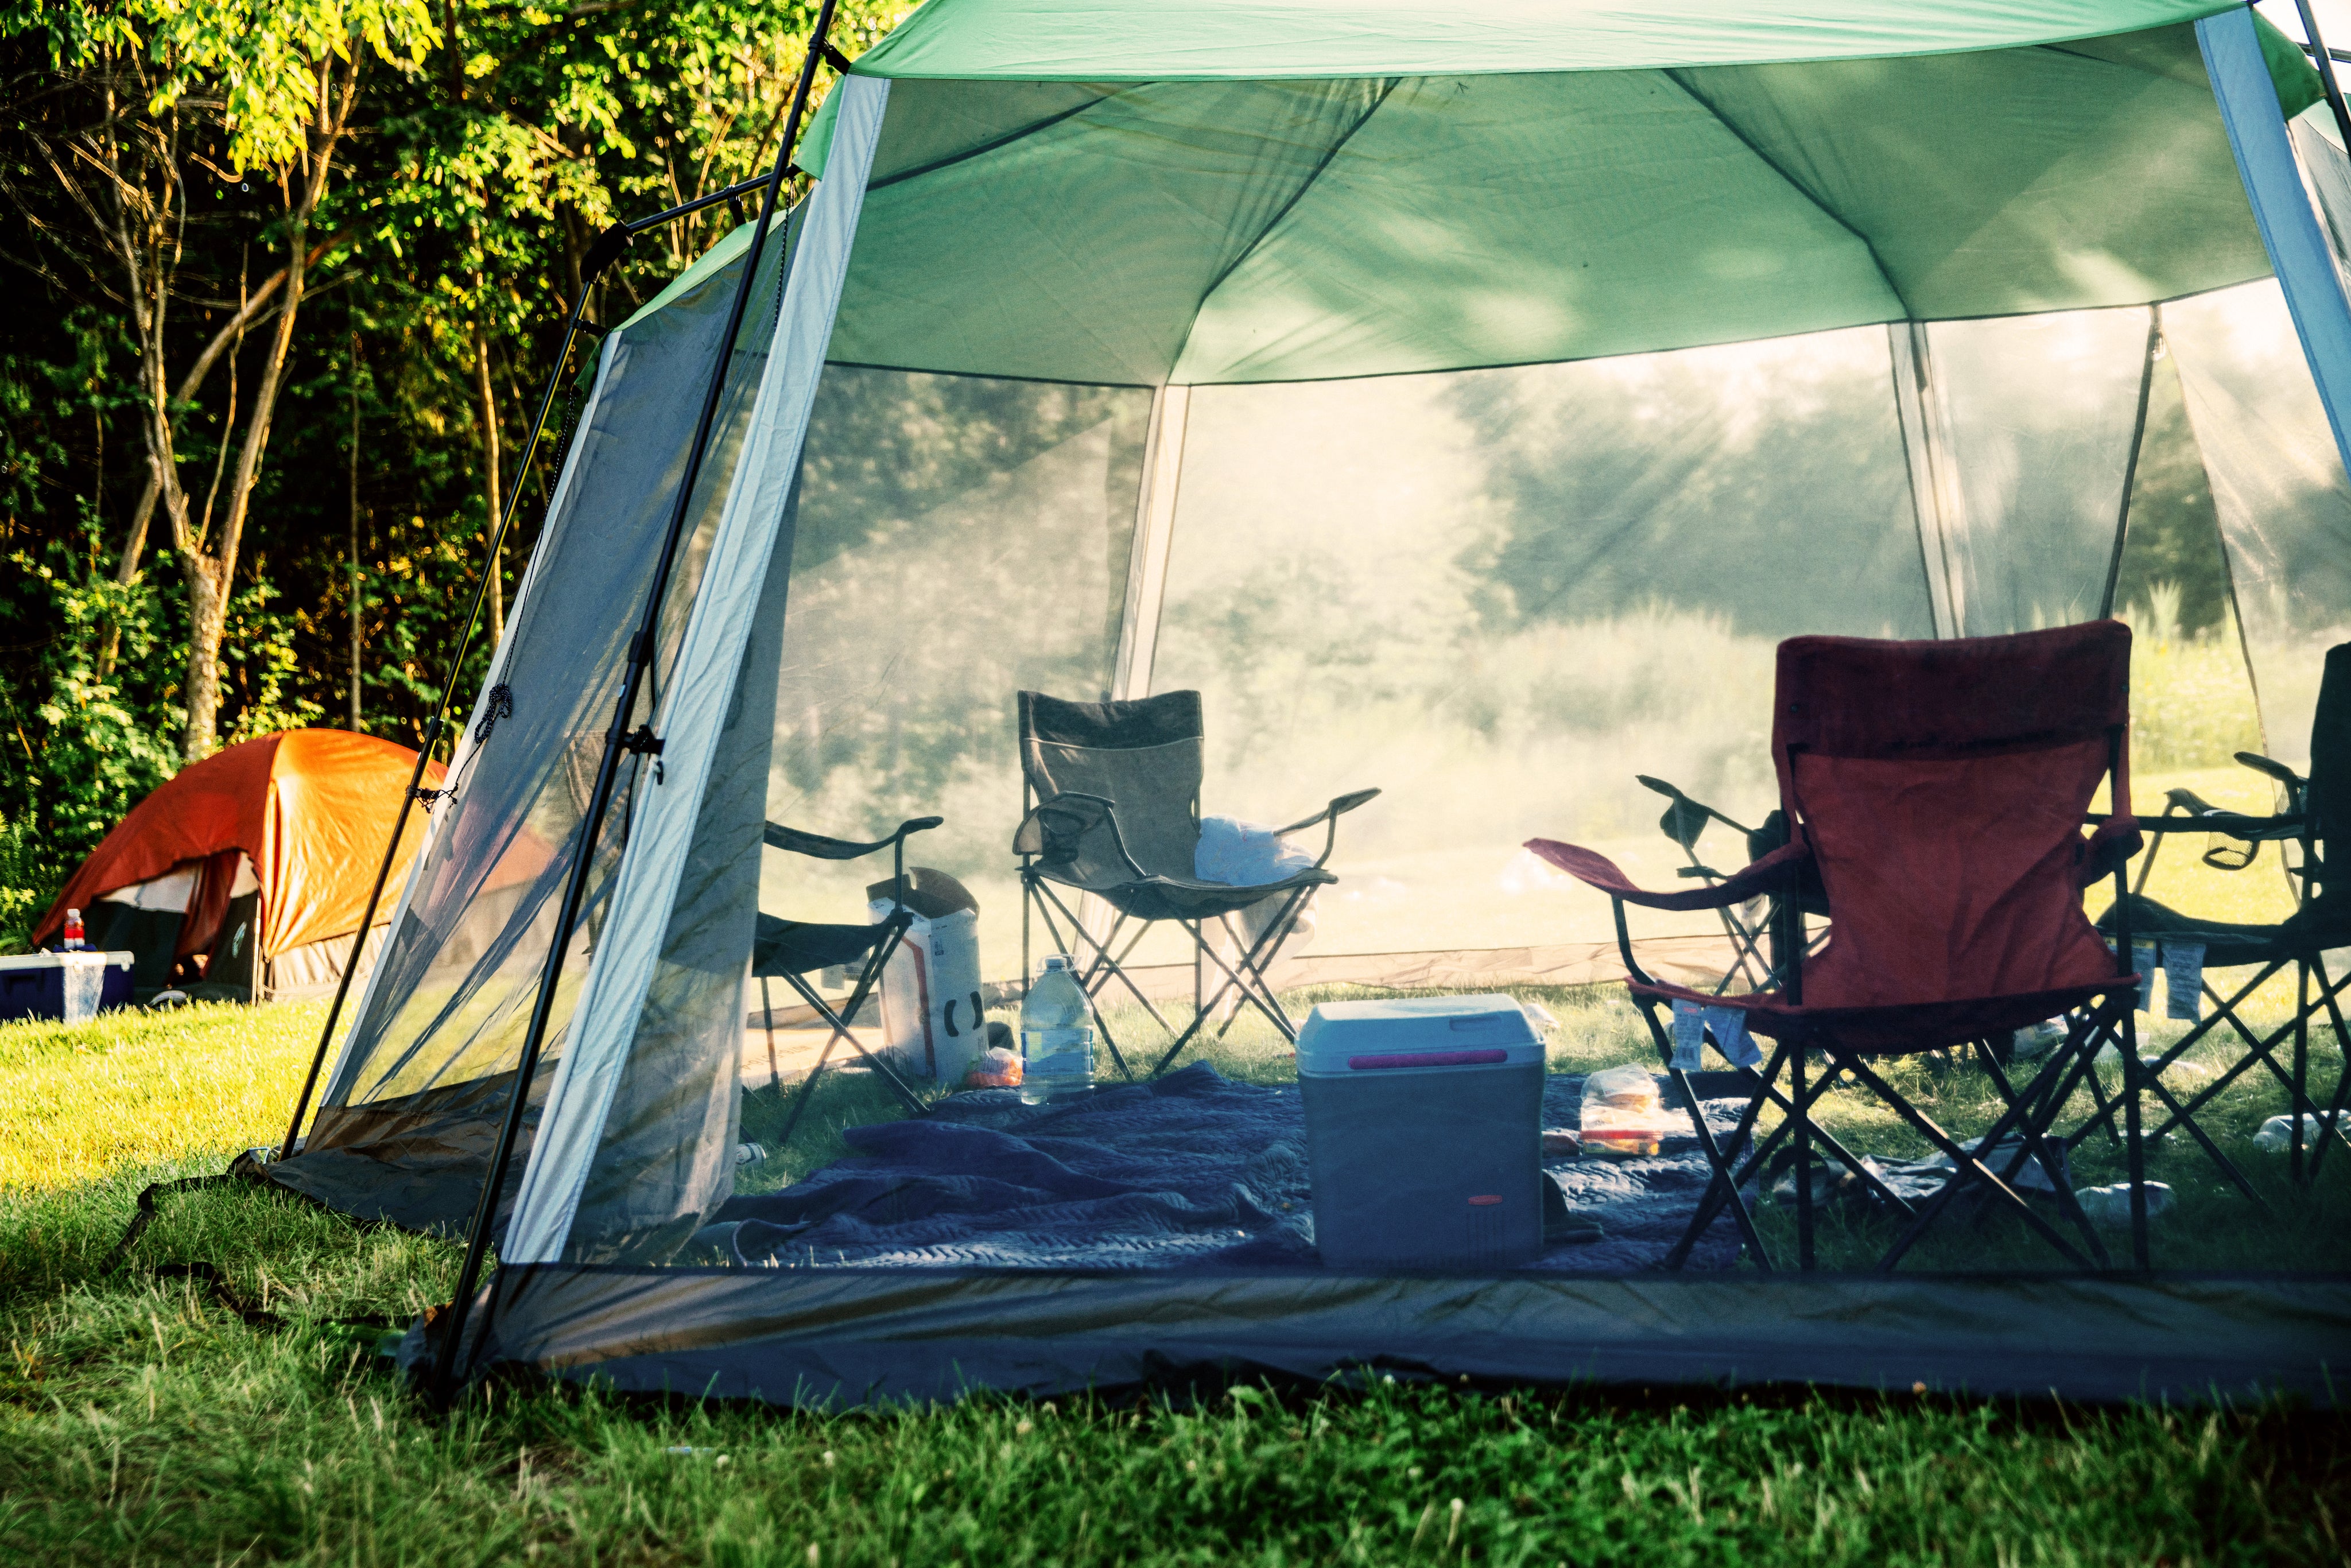 camping-tents.jpg